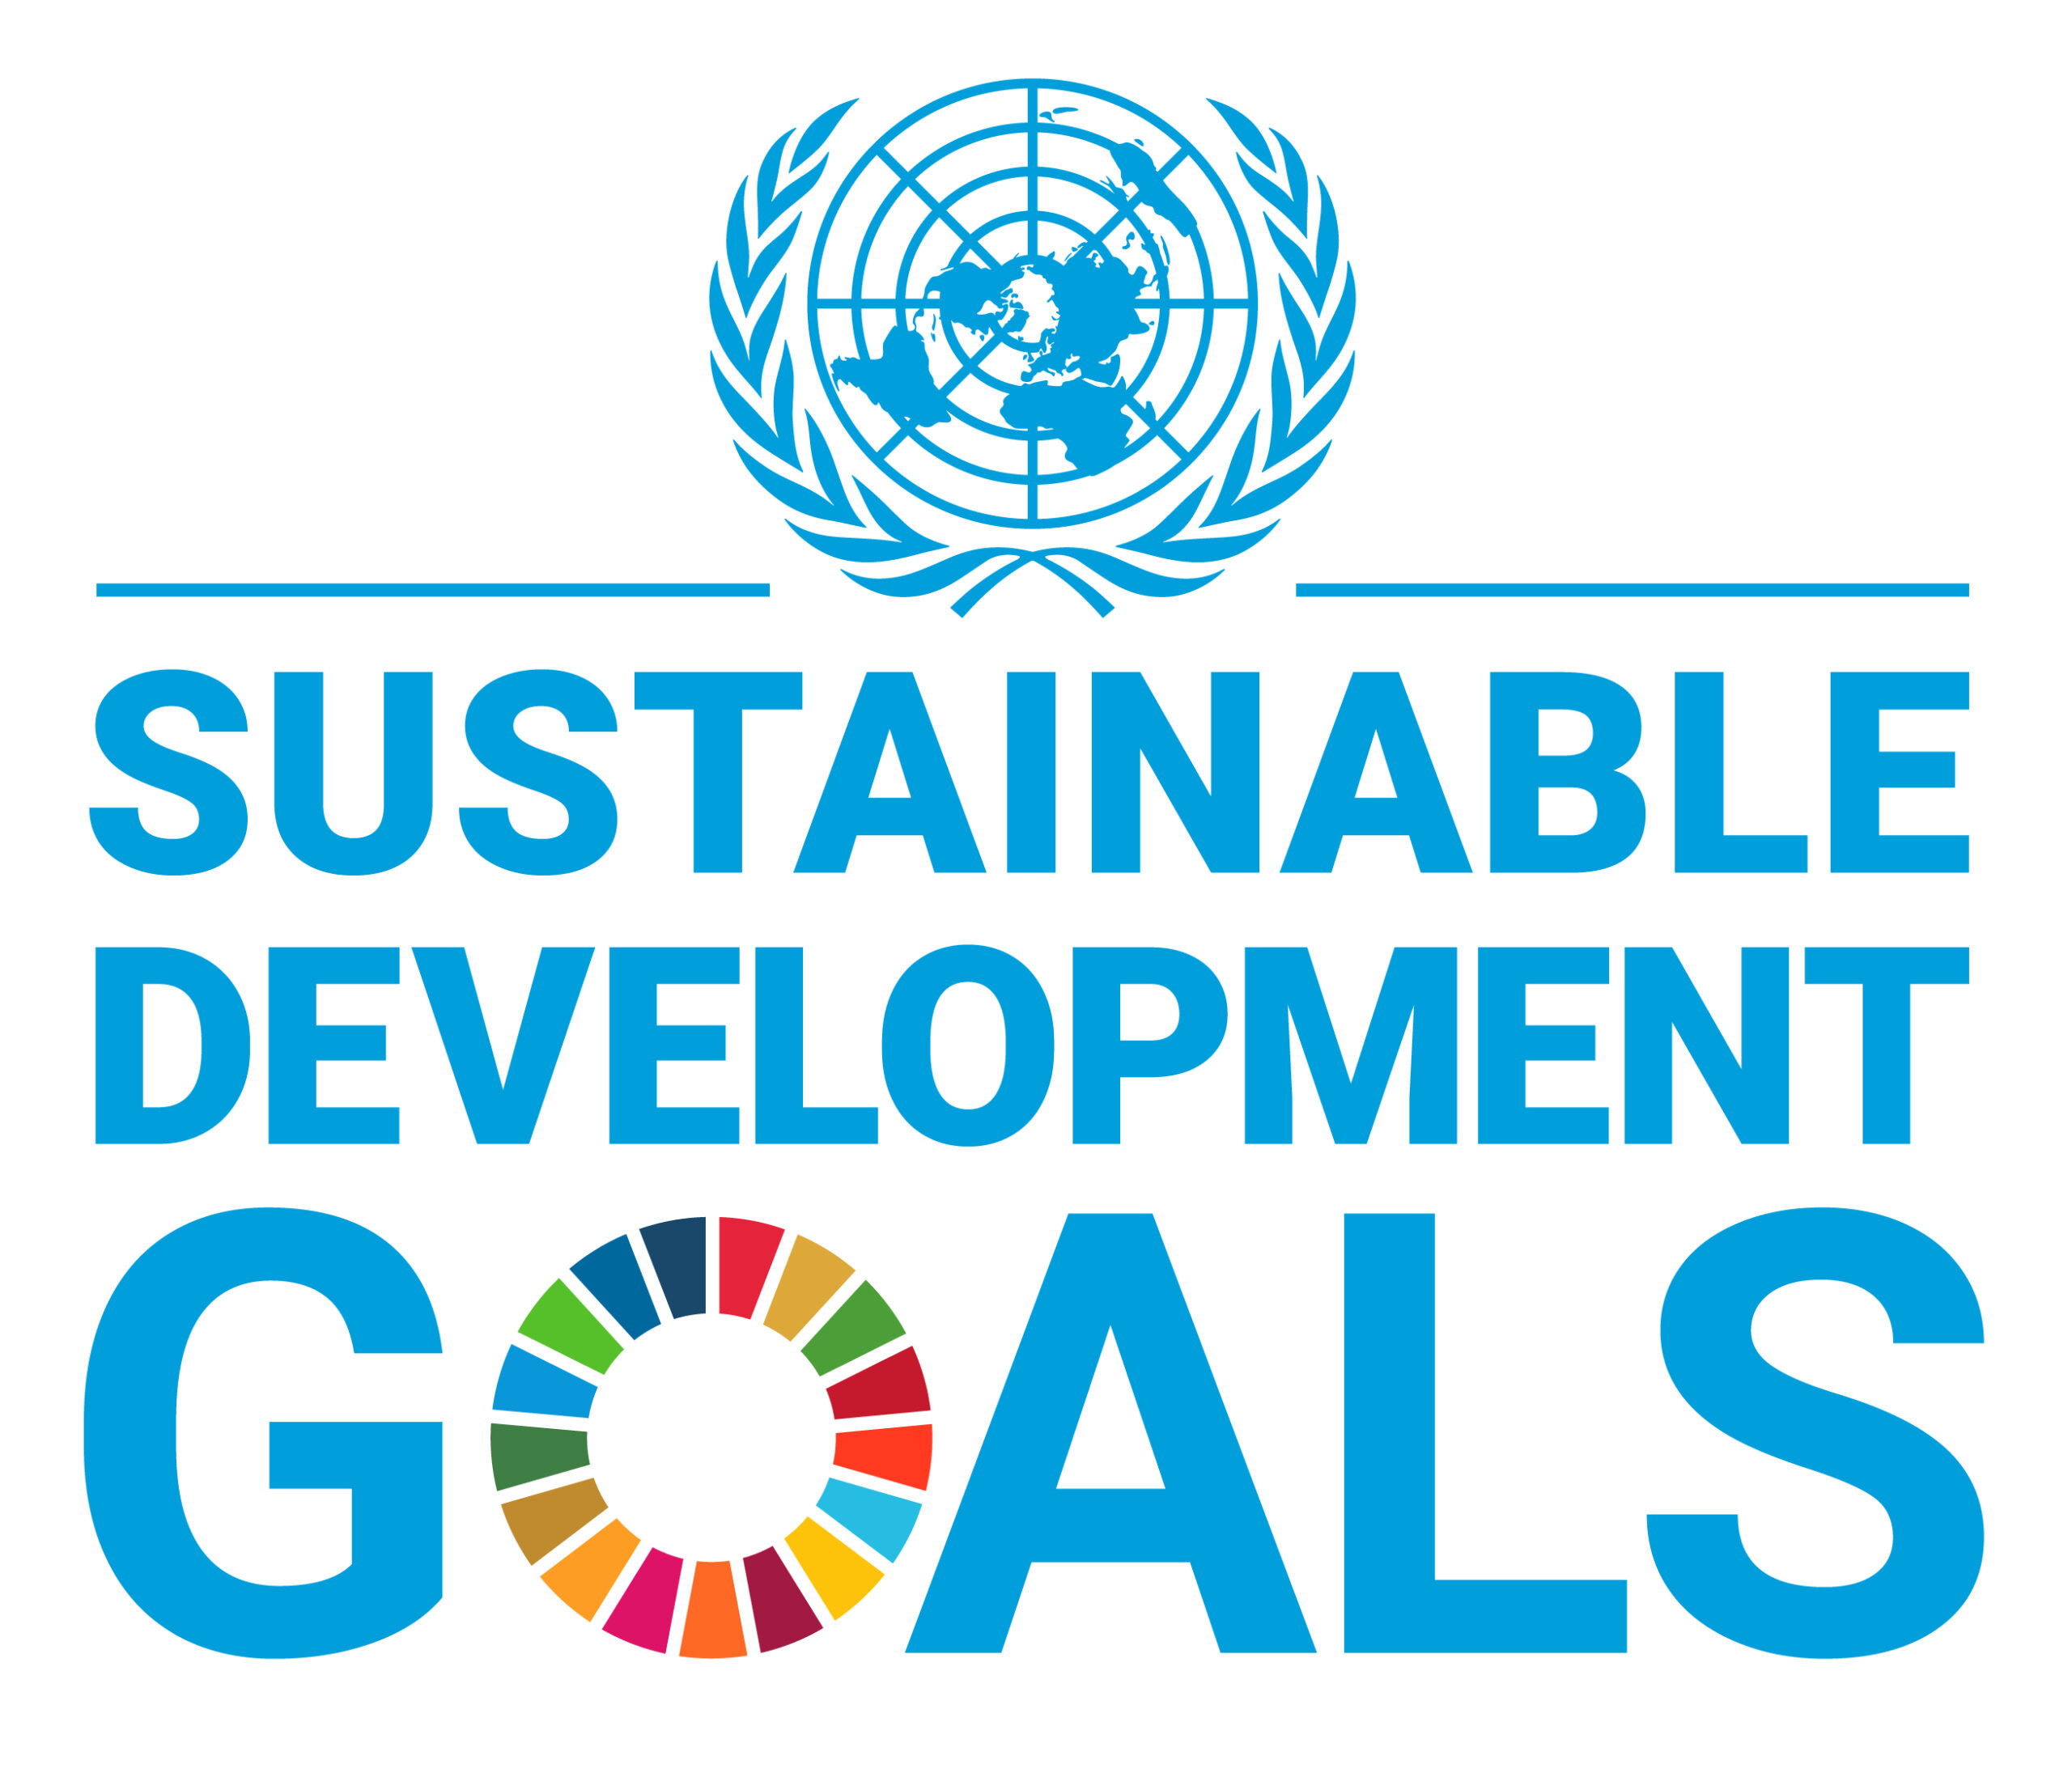 Exploring the UN Sustainable Development Goals — Goal 5: Gender